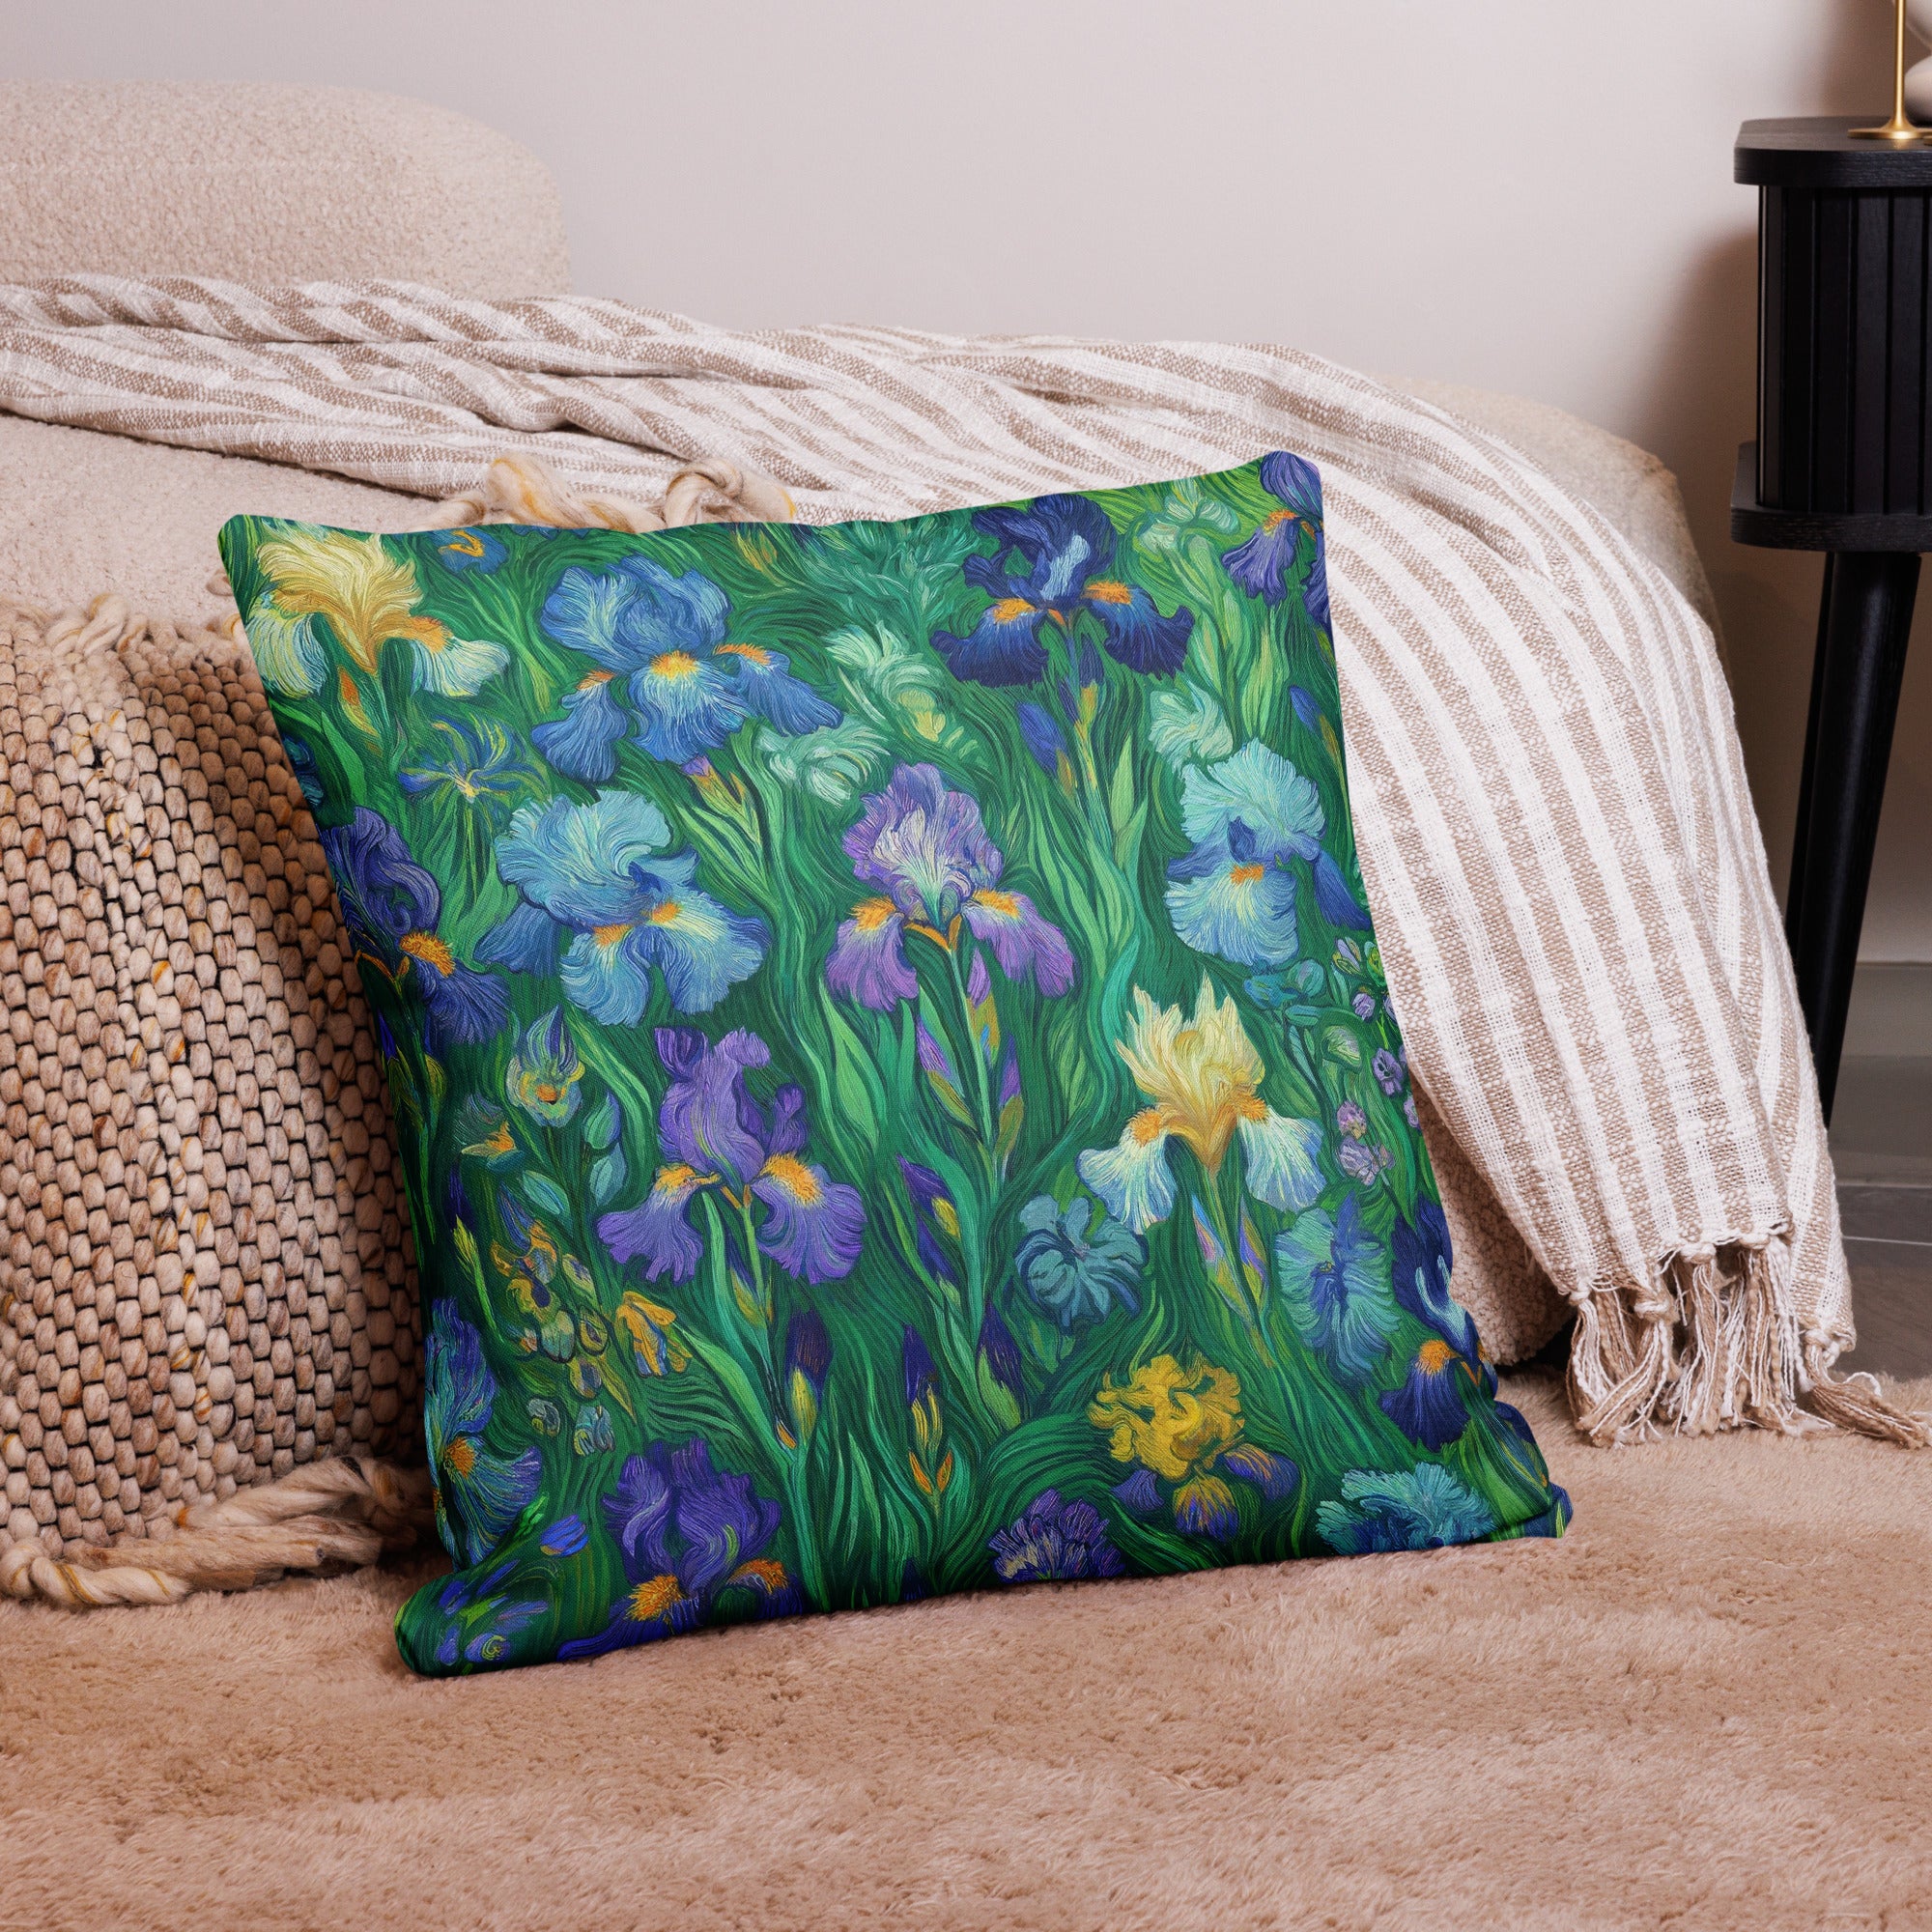 Vincent van Gogh 'Irises' Famous Painting Premium Pillow | Premium Art Cushion